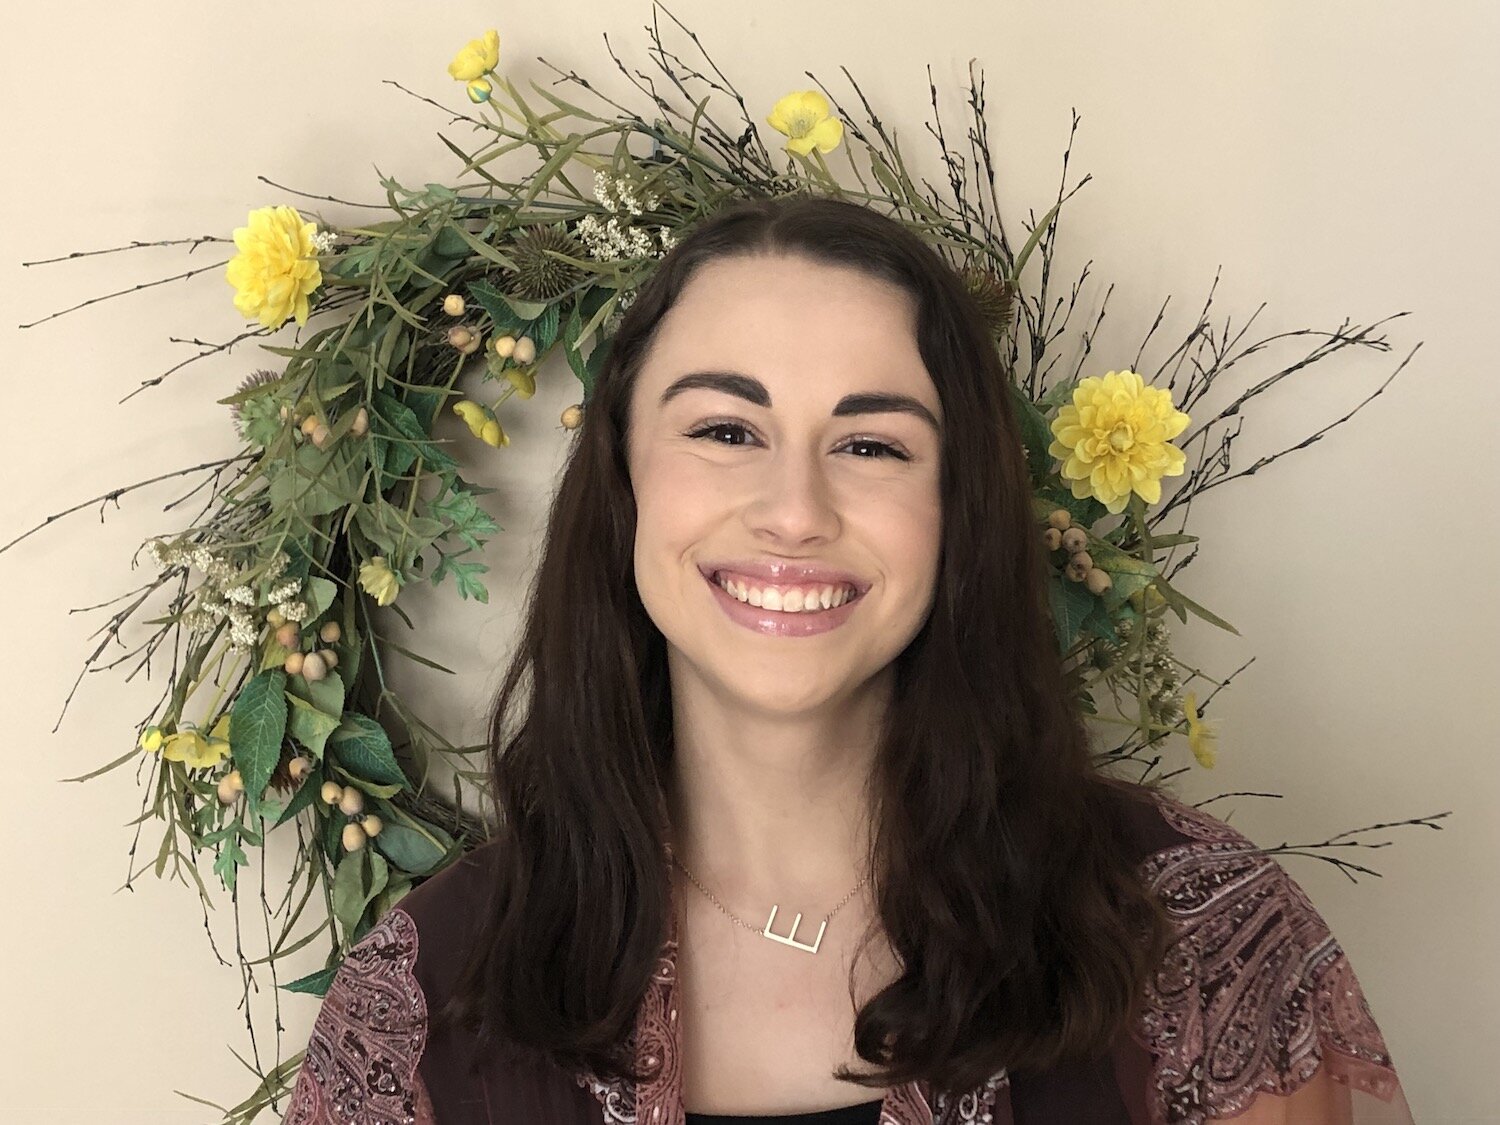 elena walker smiles in front of a wreath of flowers